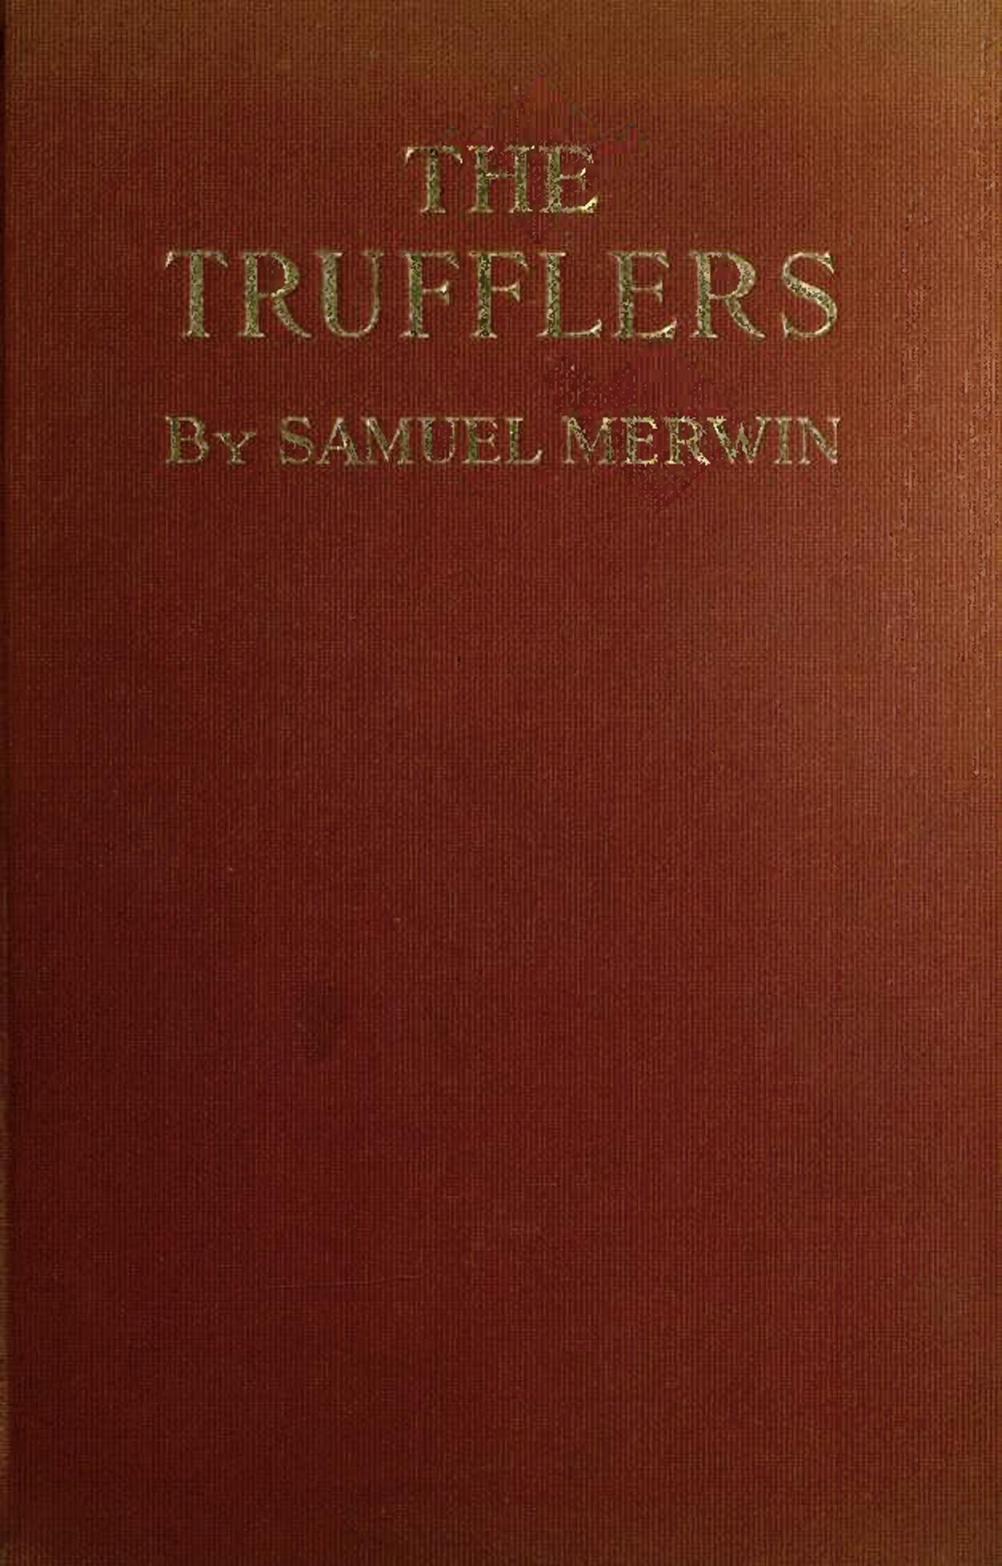 The Trufflers: A Story